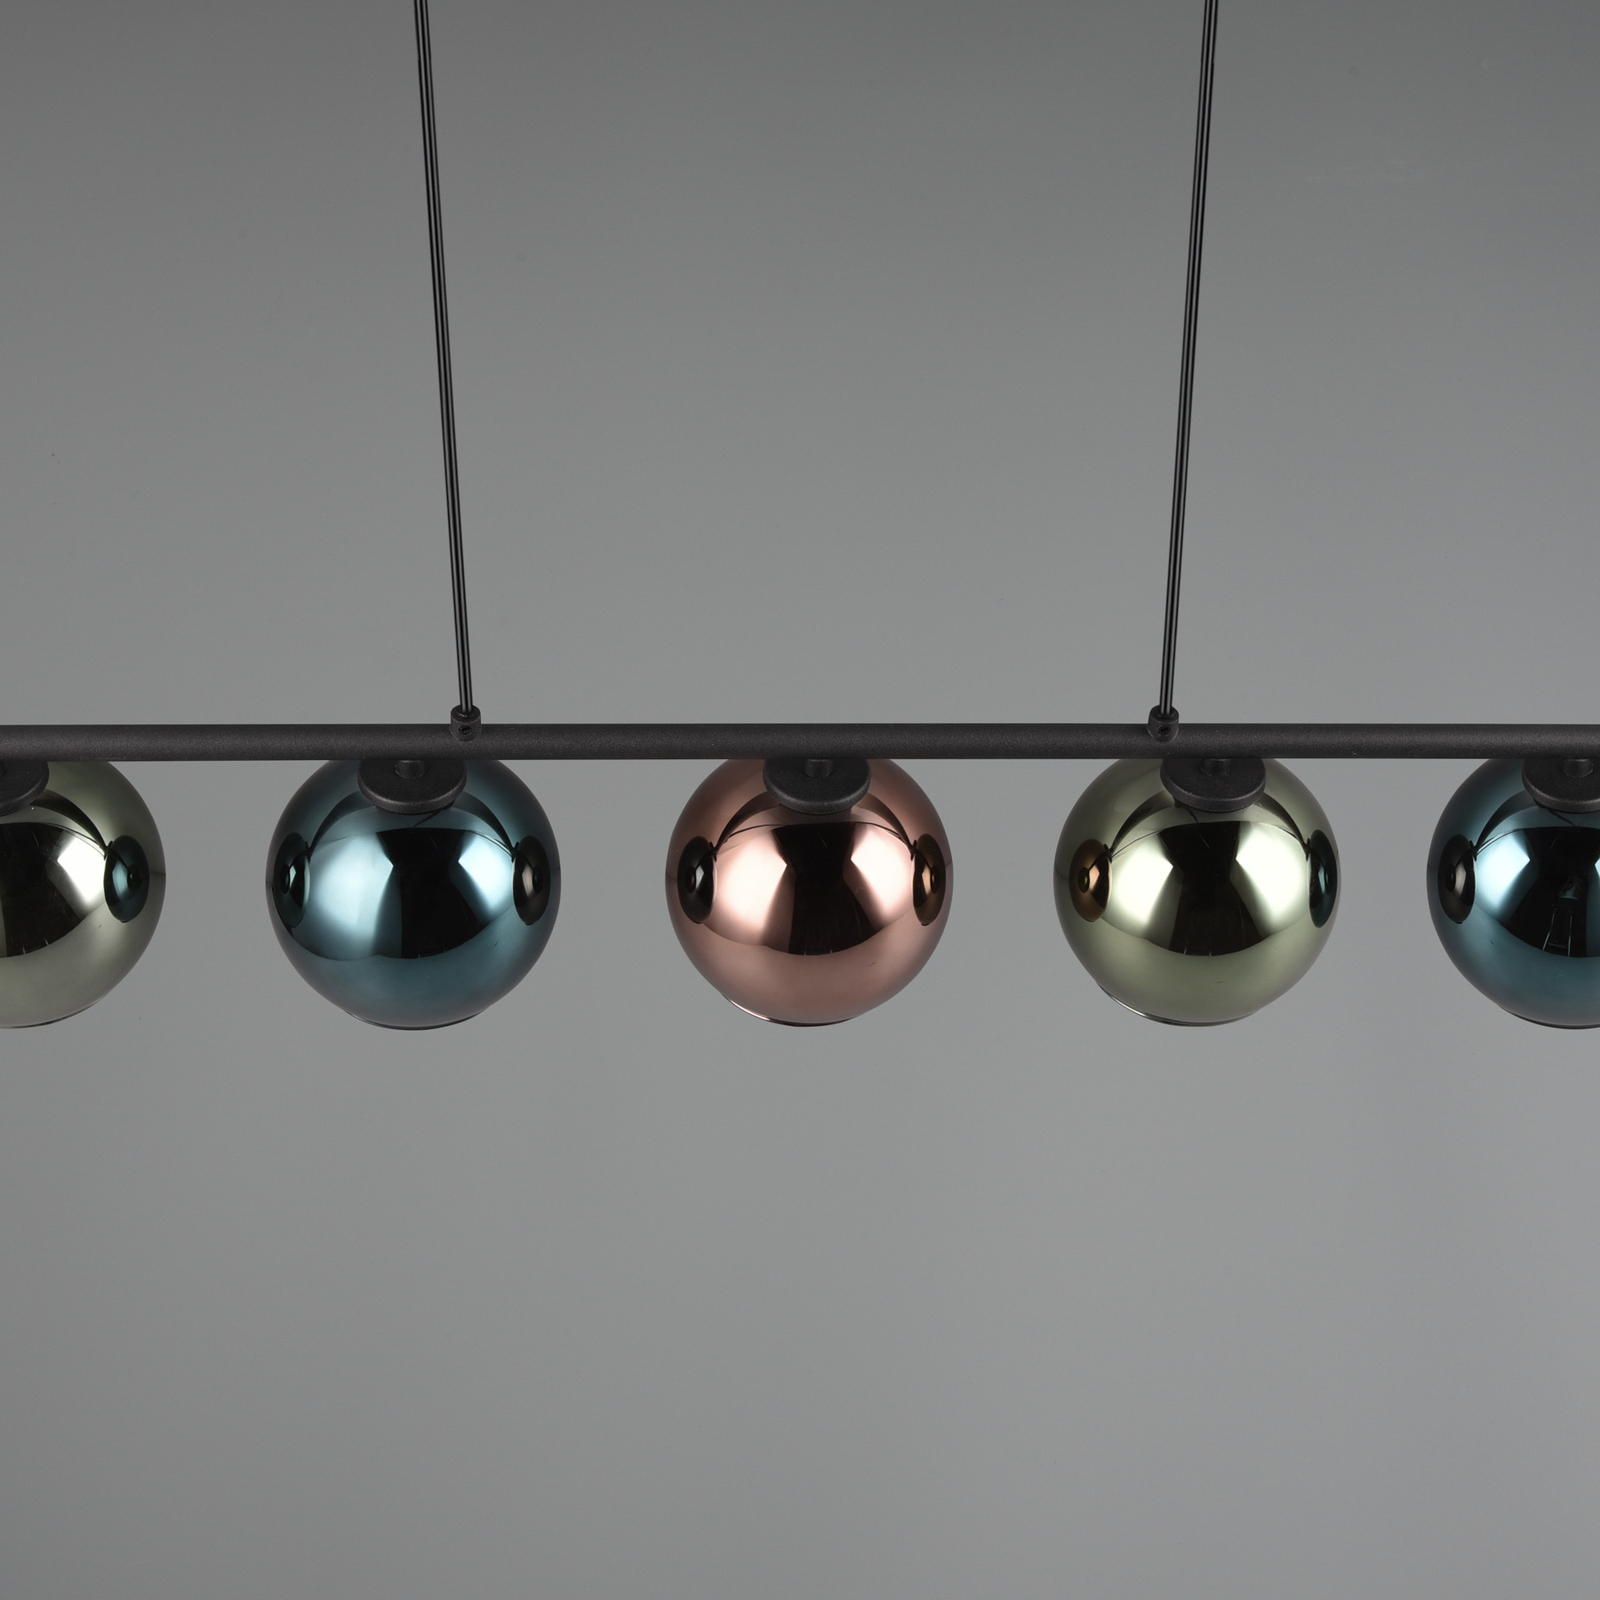 Sheldon pendant light with 5 glass globes